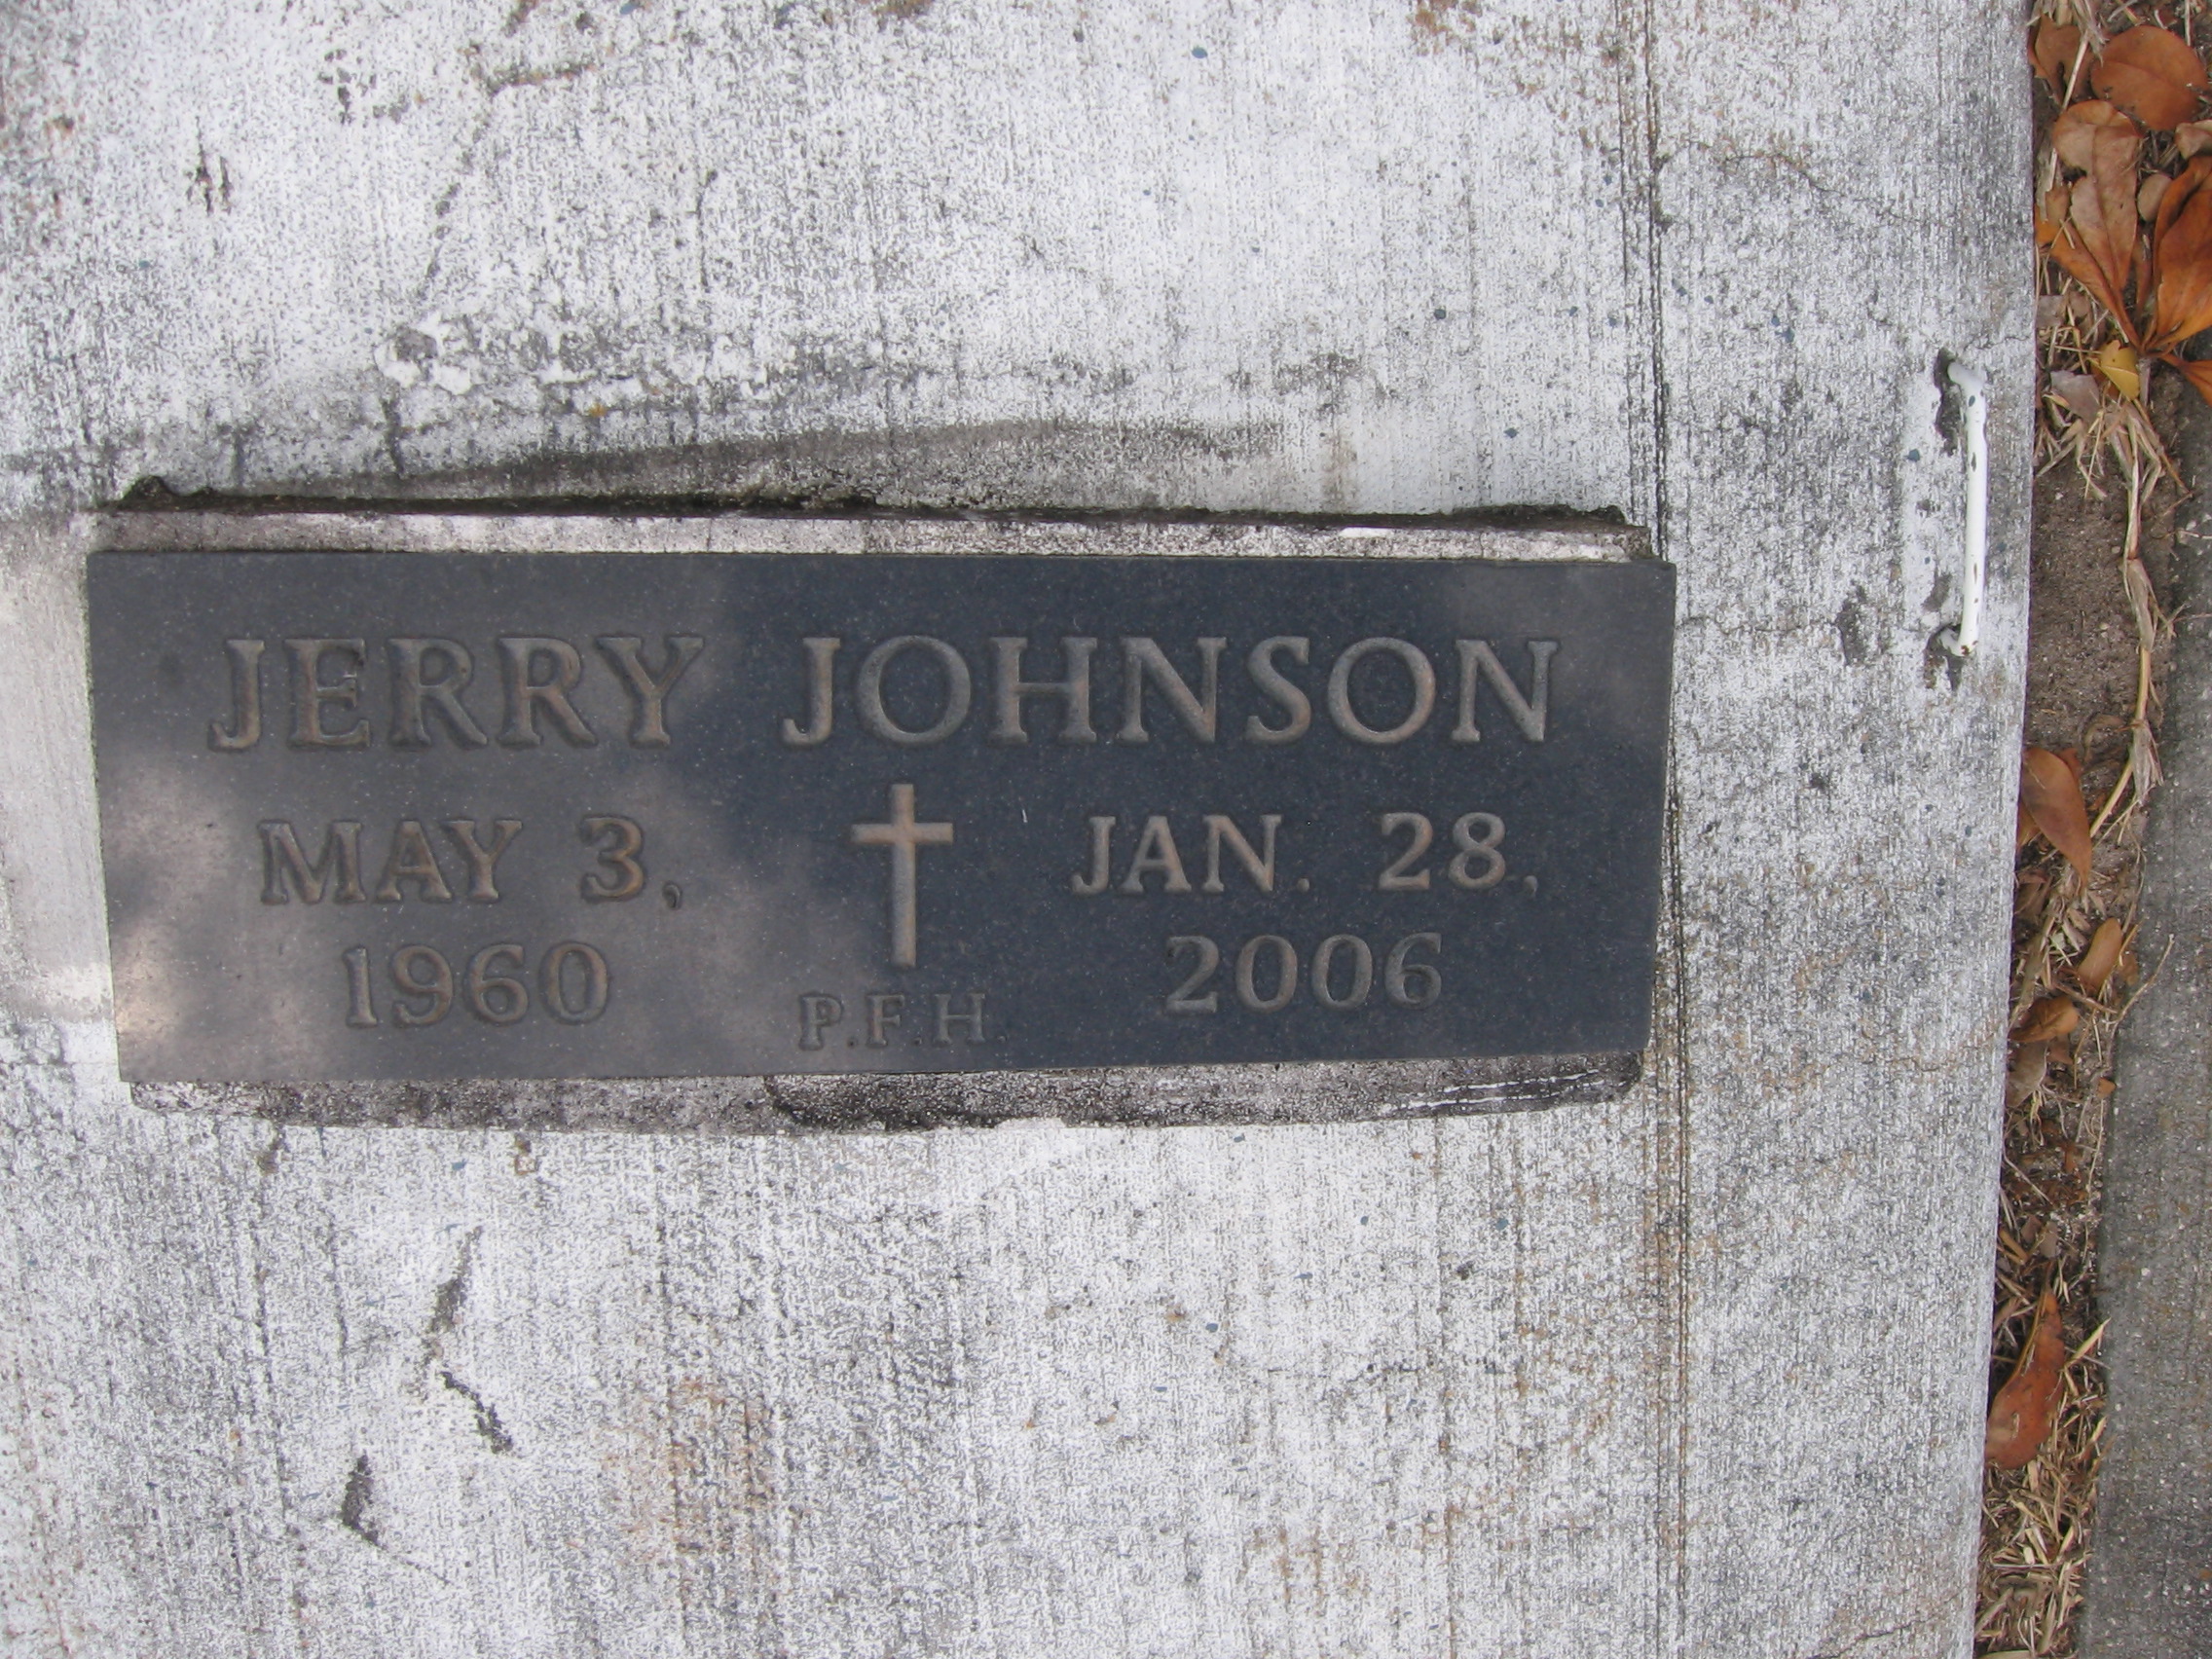 Jerry Johnson